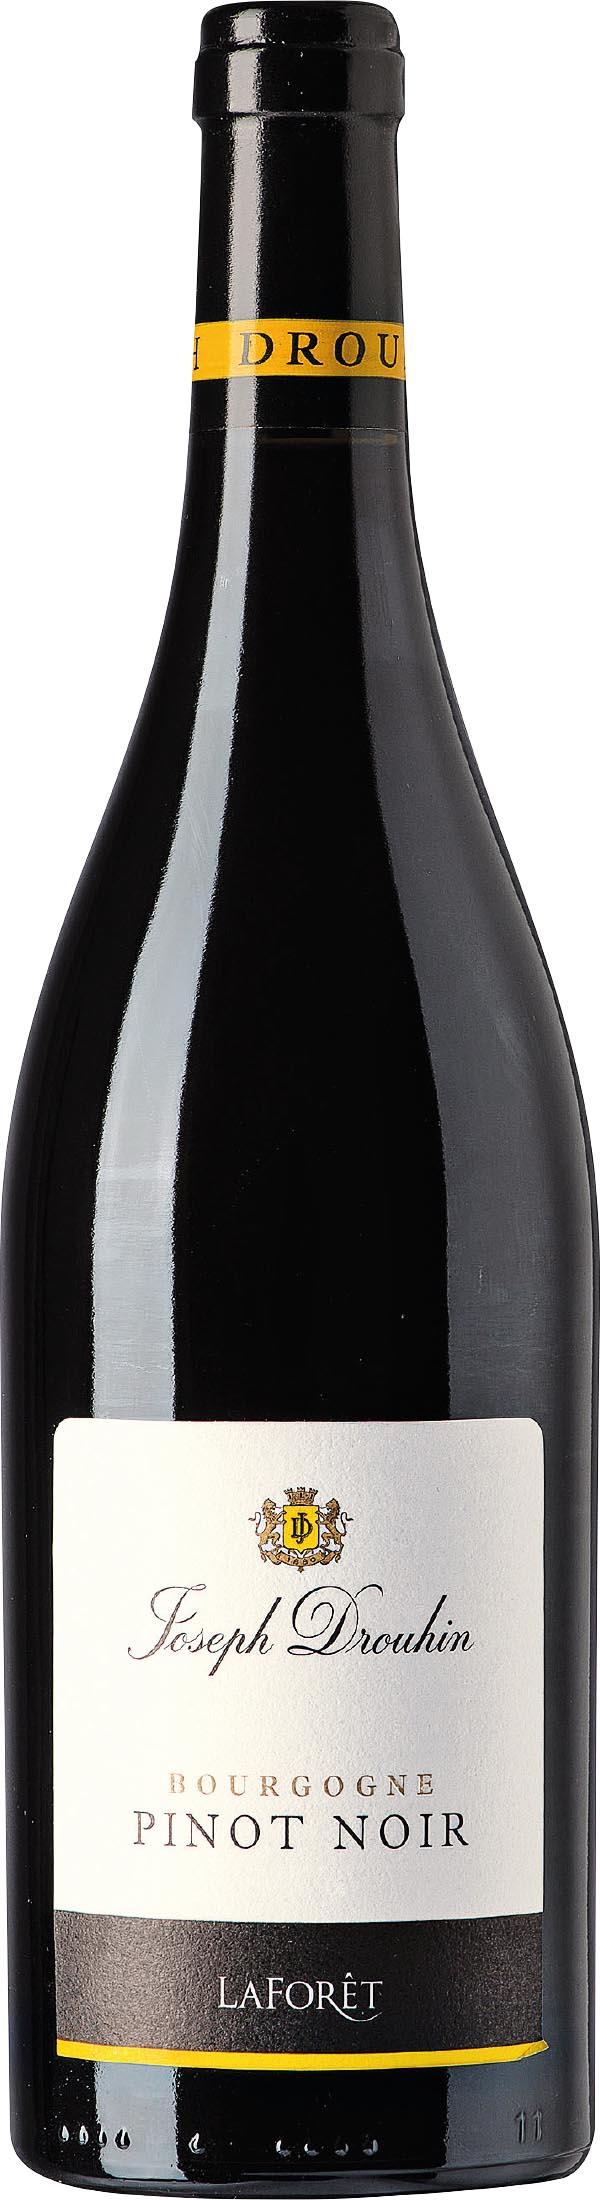 Bourgogne Pinot Noir LaForêt